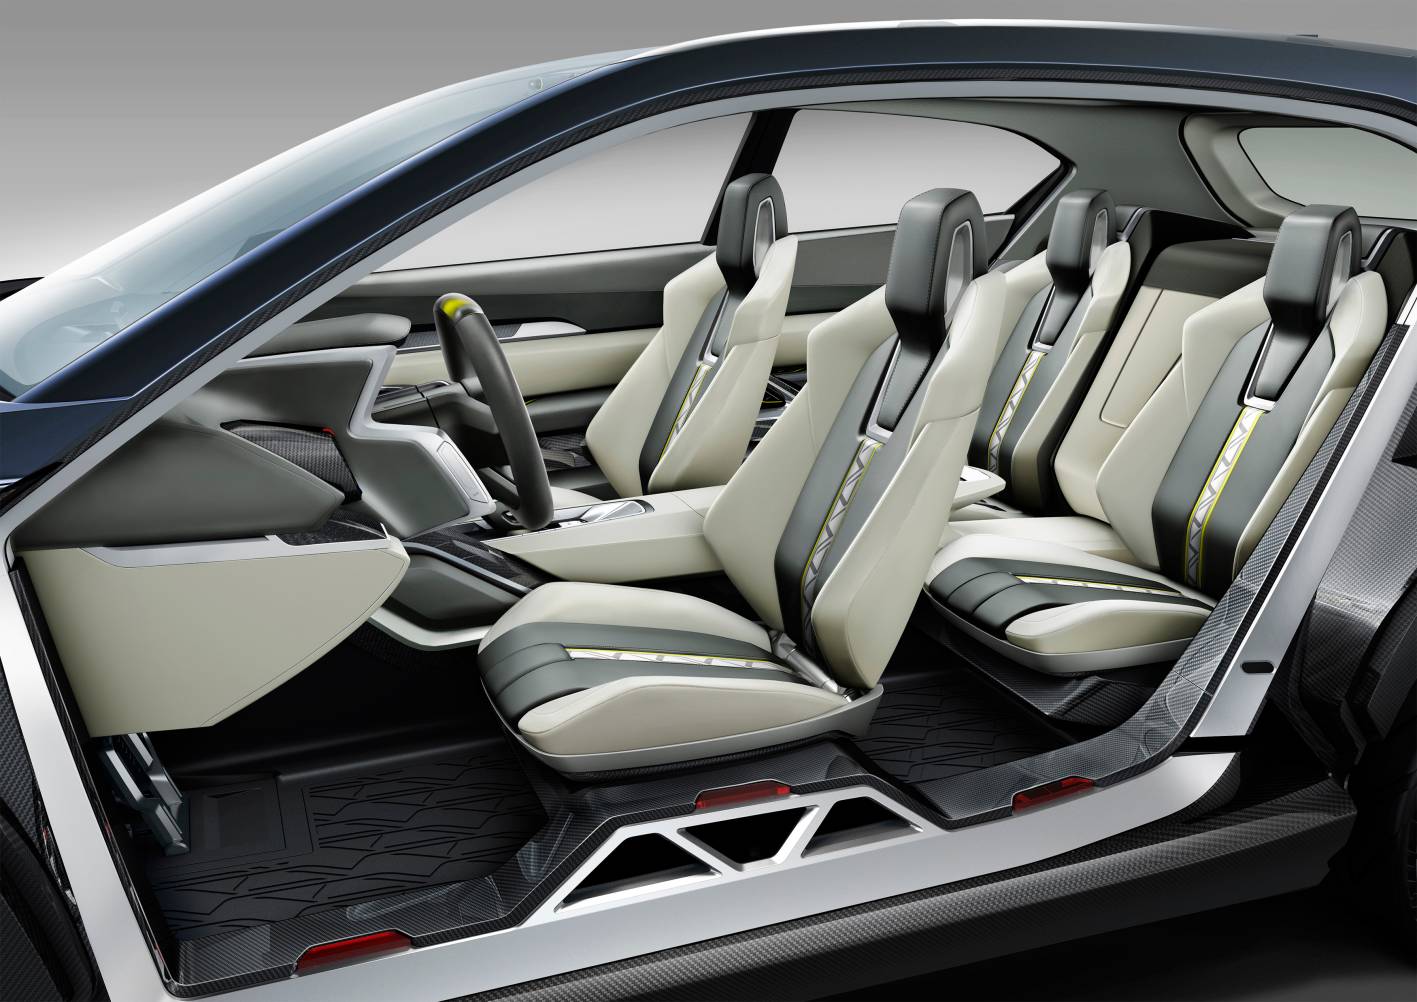 Subaru Cars - News: VIZIV 2 concept previews future drivetrain